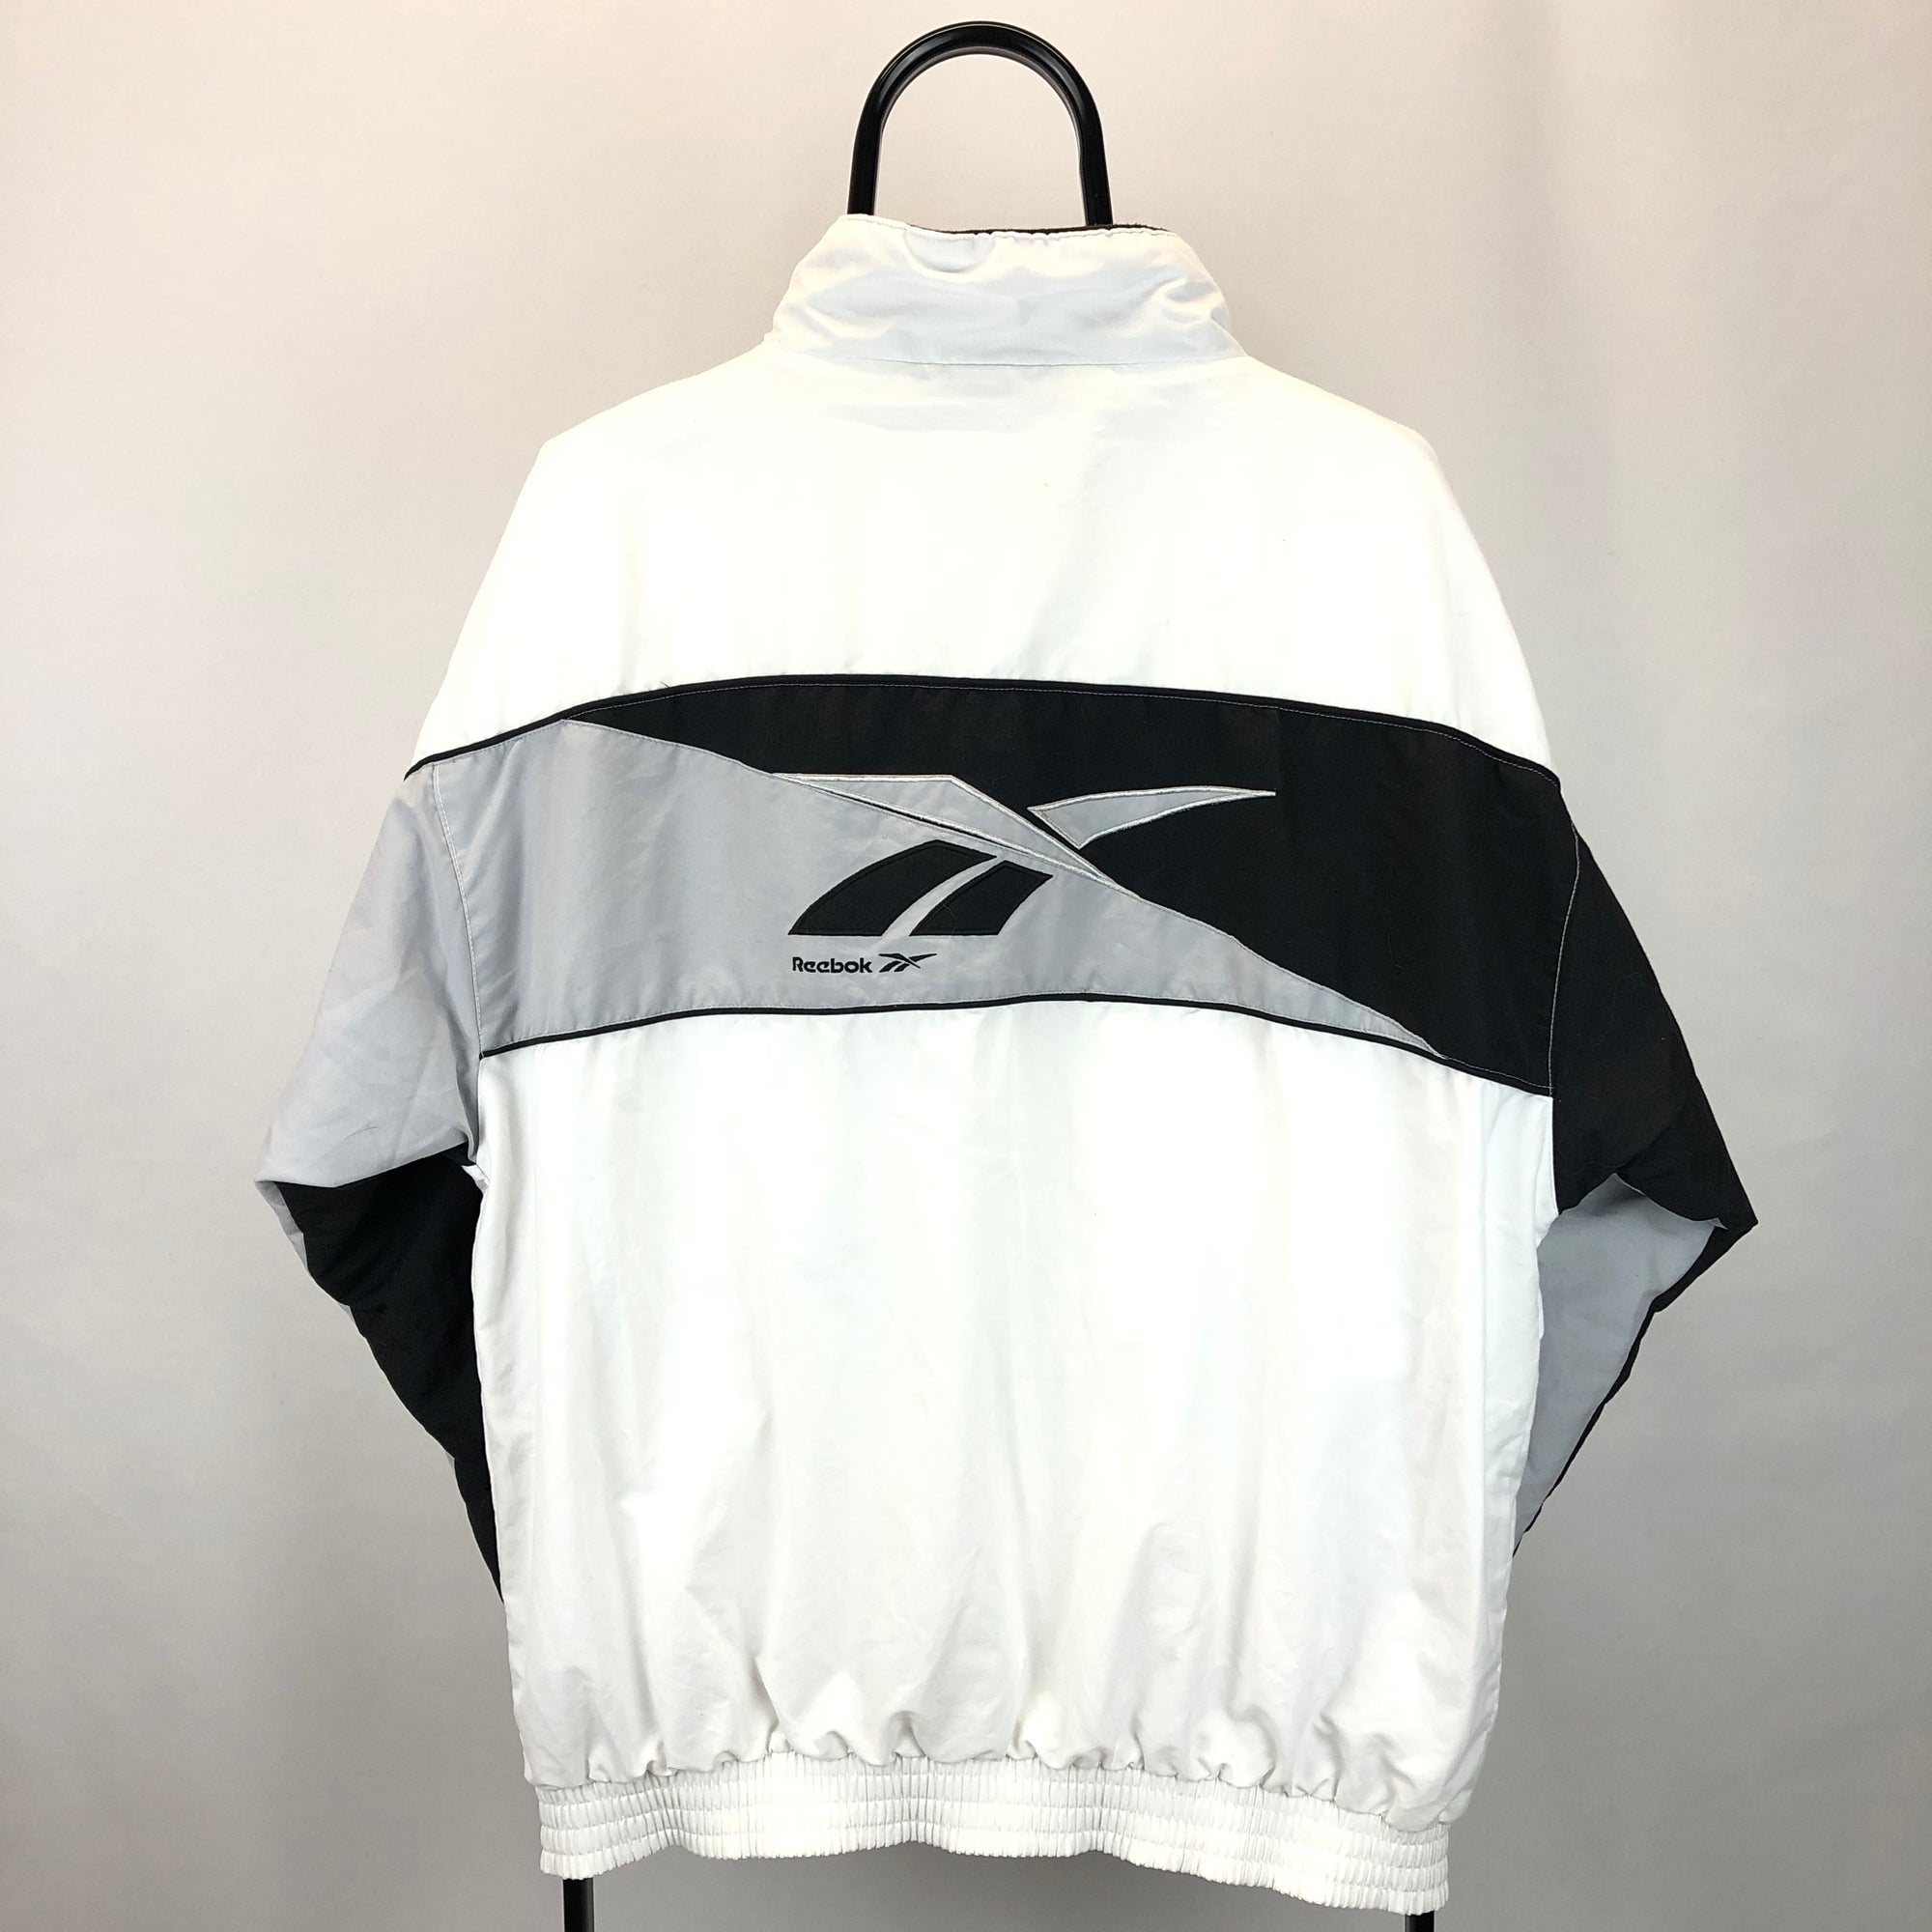 Vintage 90s Reebok Track Jacket in White/Grey/Black - Men's Large/Women's XL